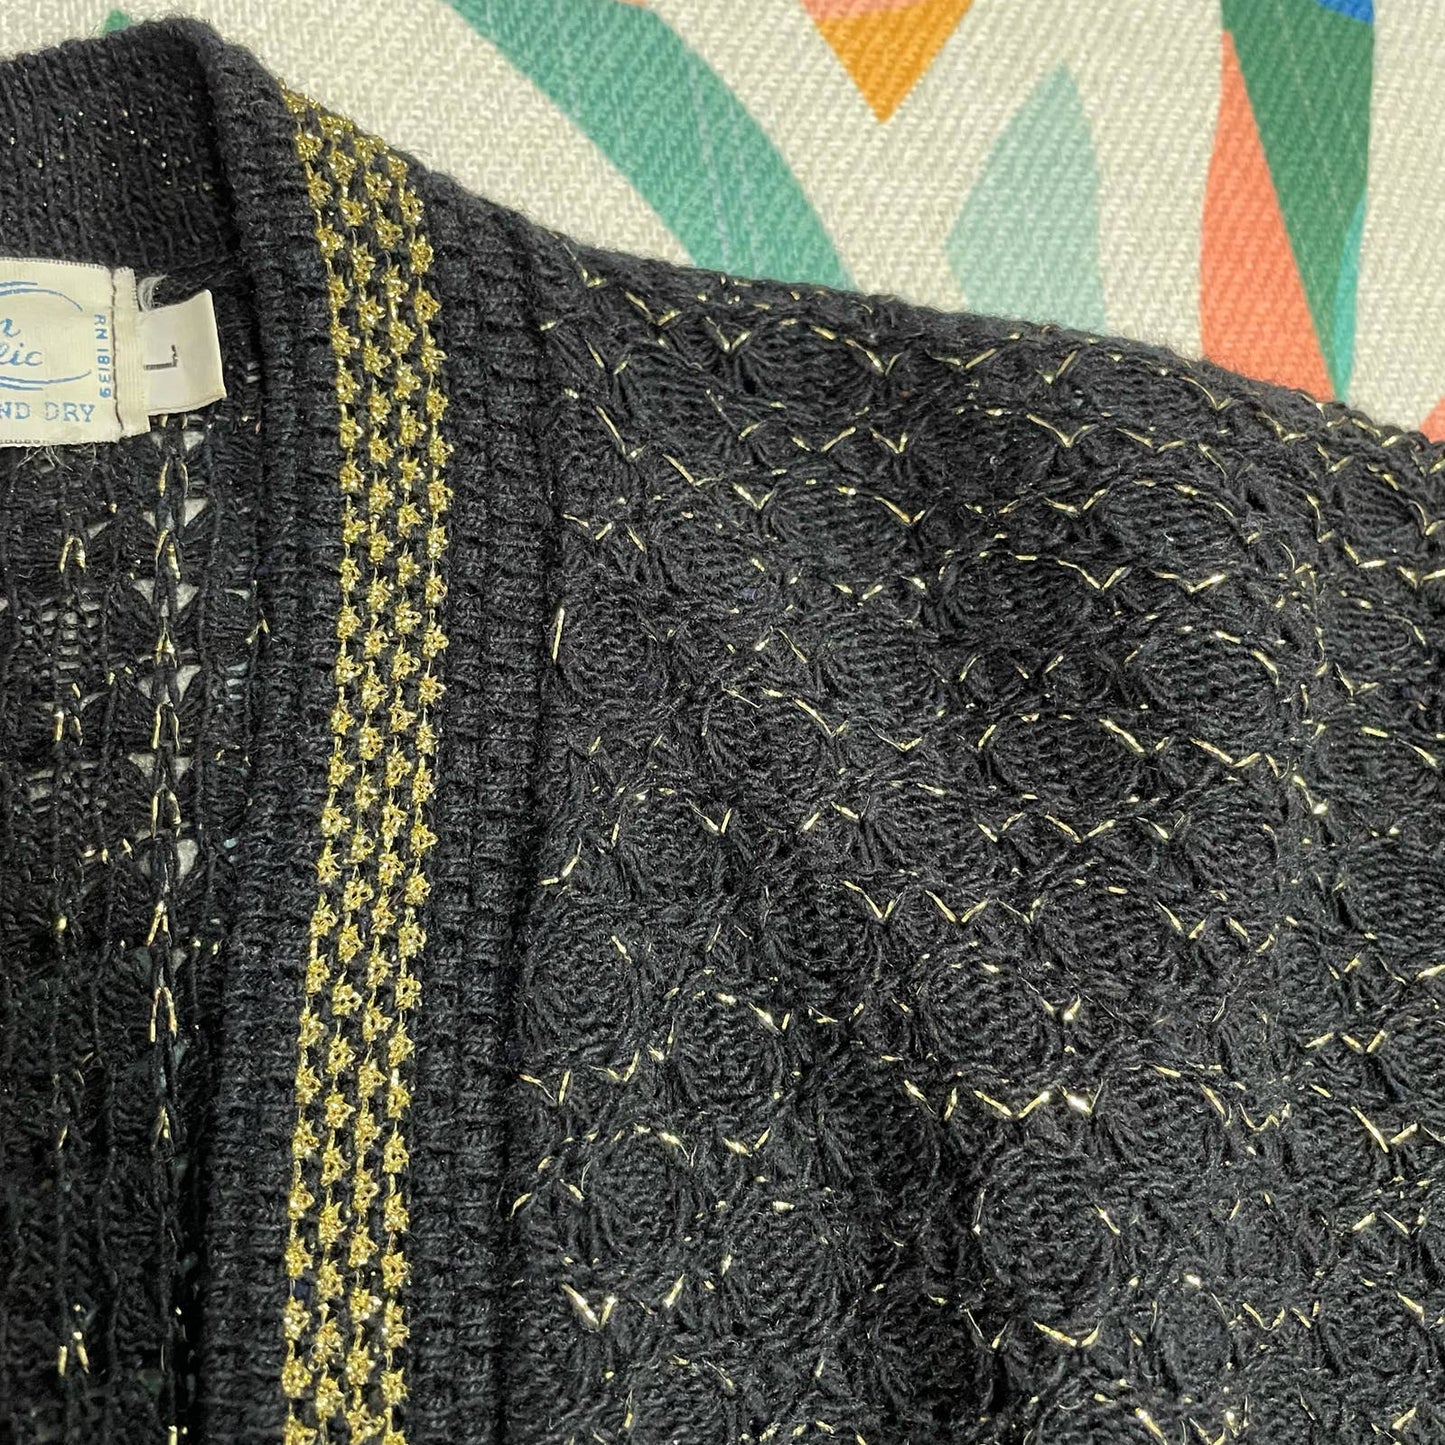 70s black and gold acrylic knit shrug cardigan sweater / size M L XL